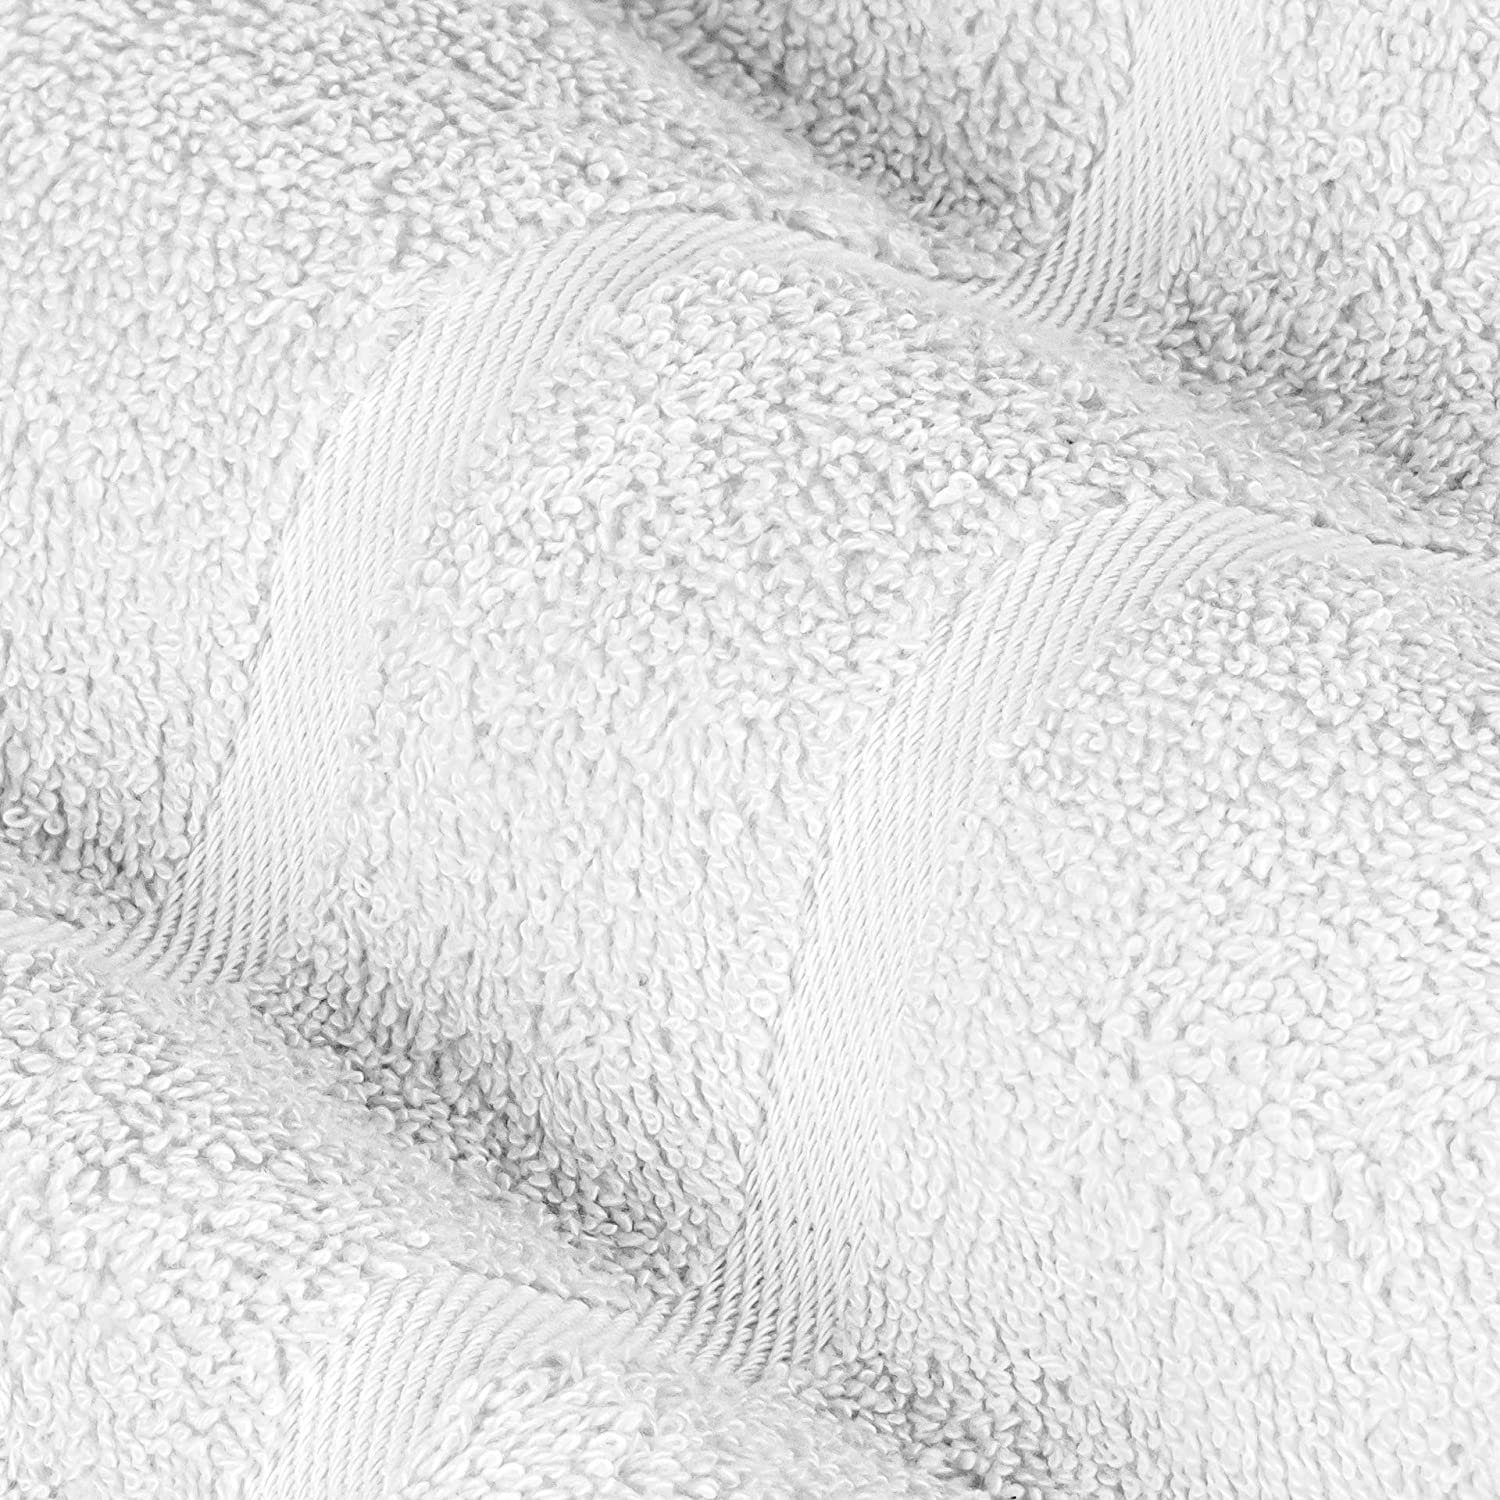 StickandShine Handtuch Set (12 Pack, Farben 12er als Weiß Baumwolle Frottee 2x Gästehandtuch in GSM 500 Badetücher 100% Baumwolle verschiedenen 100% Handtücher (Spar-set), Duschtücher Handtuch 500 GSM Teilig) 4x SET 2x 2x